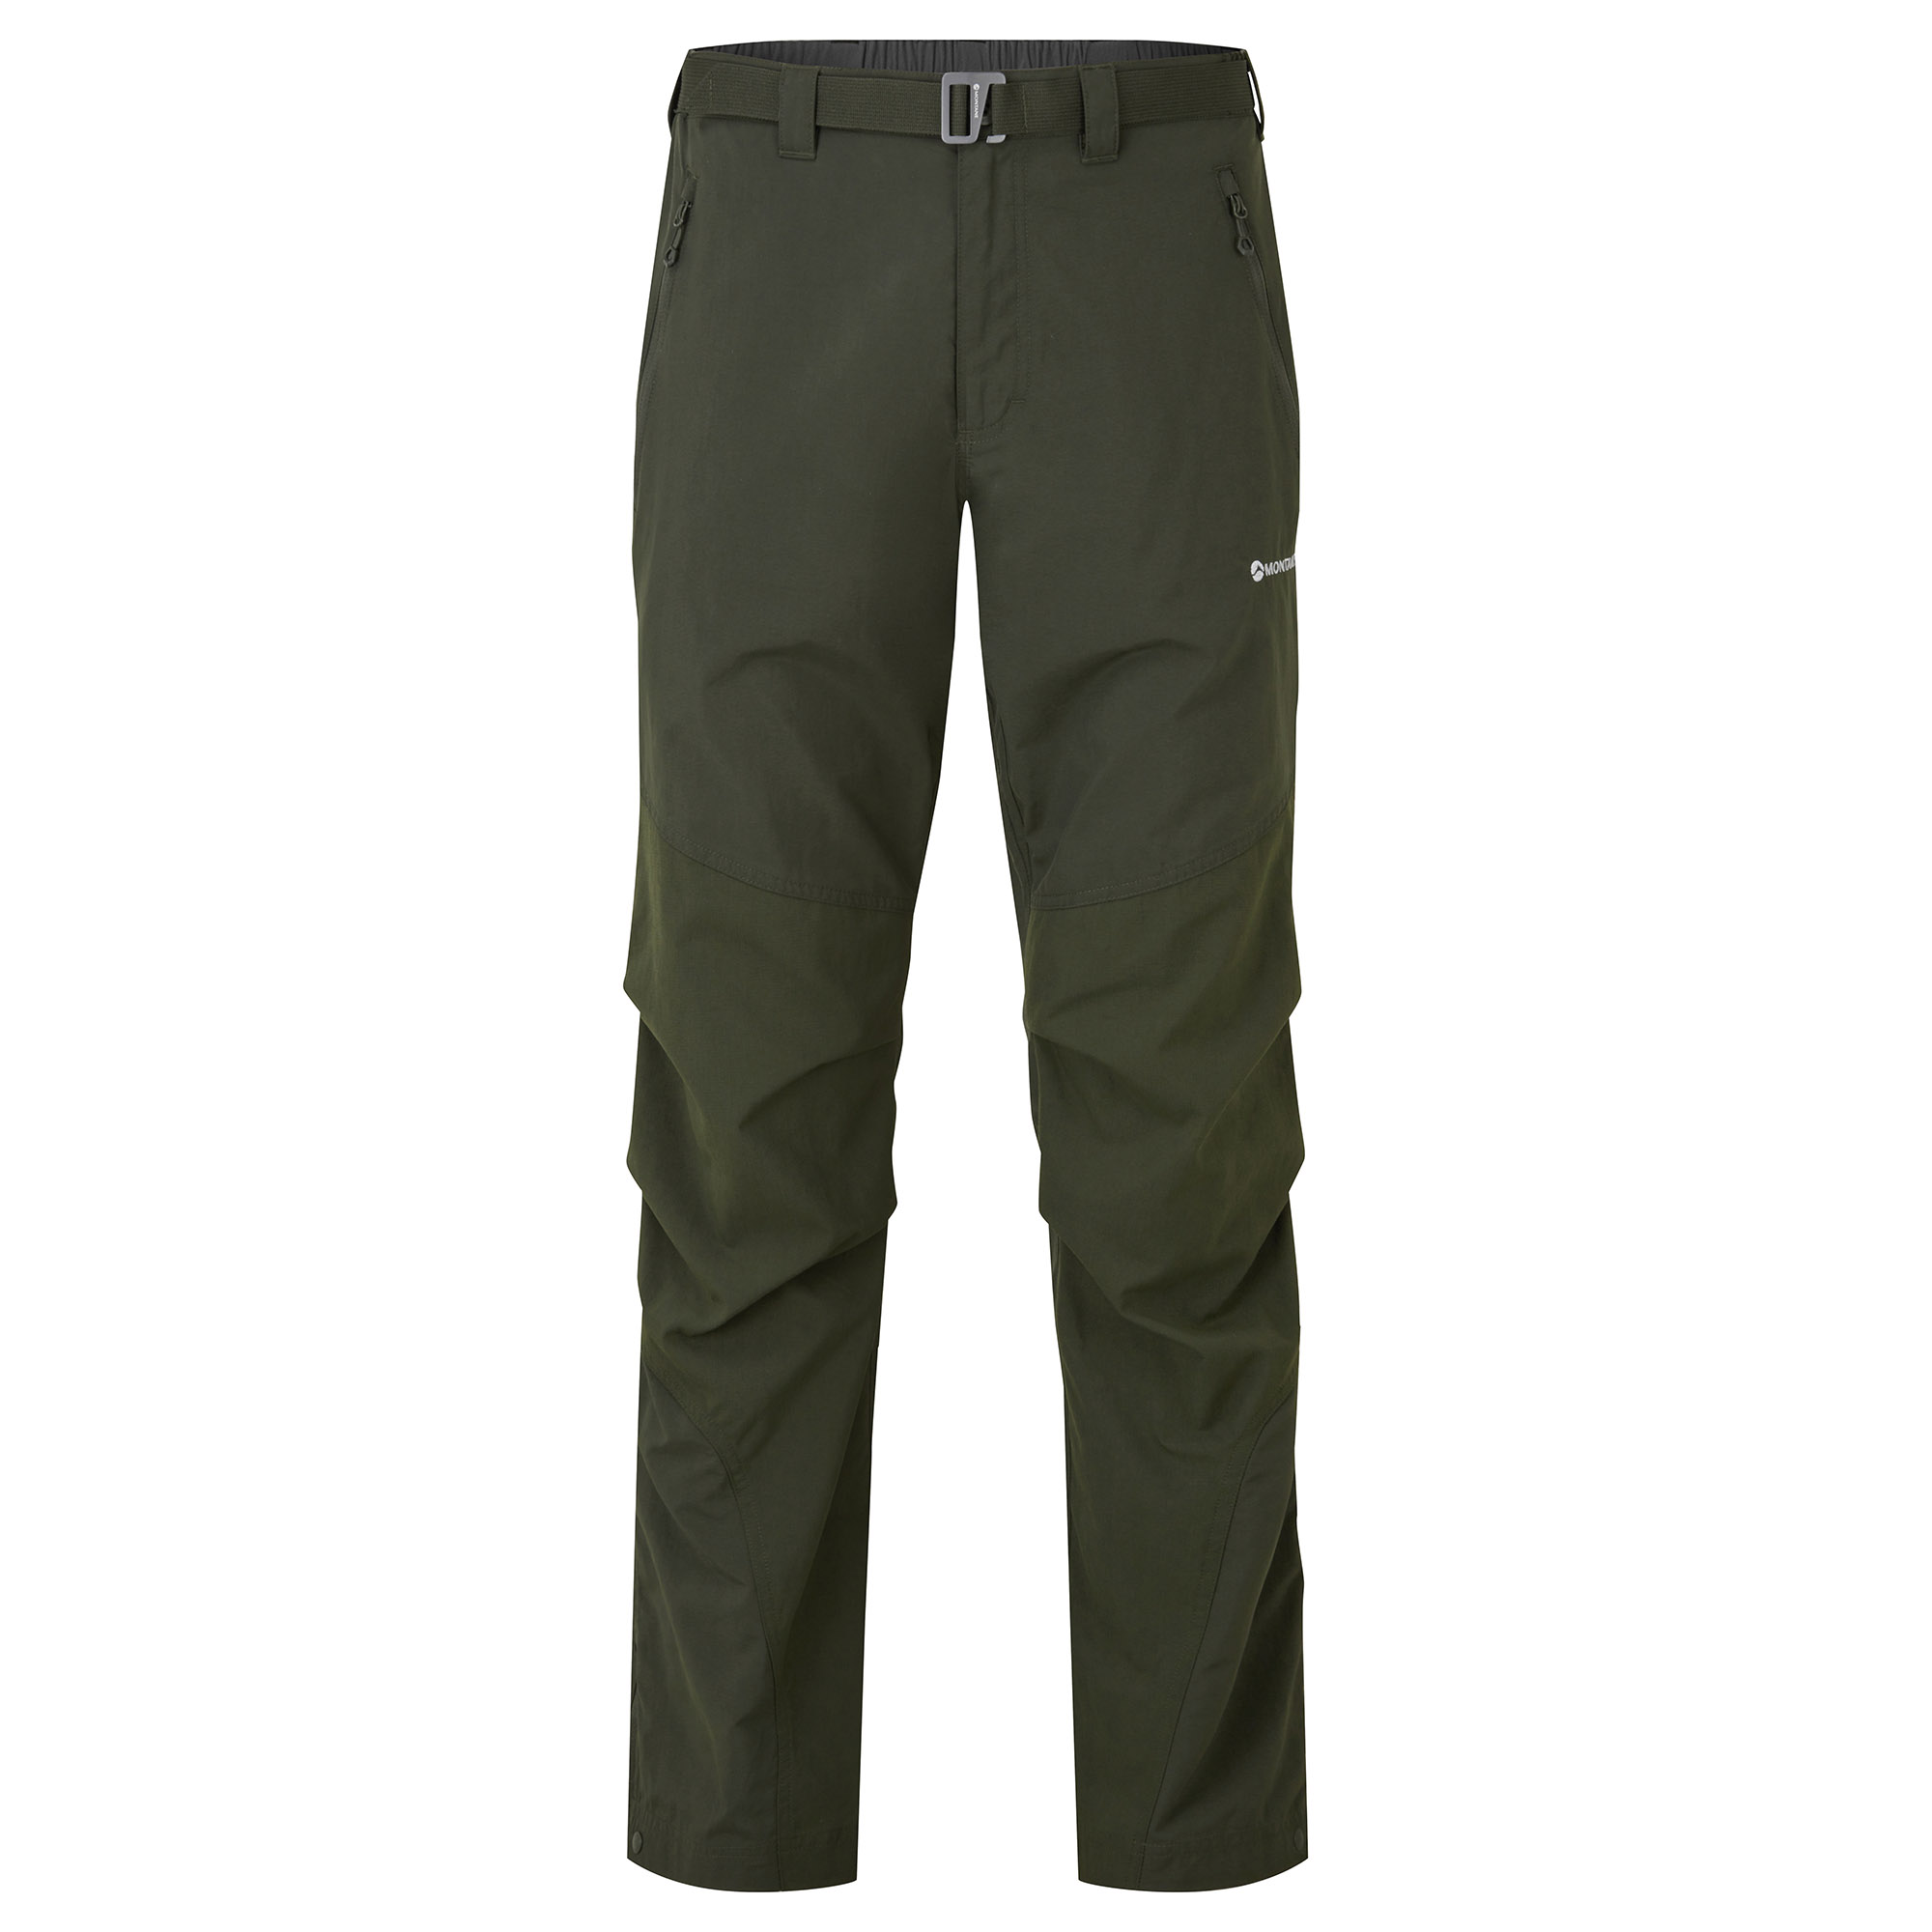 Montane pánské softshellové kalhoty Terra Pants - Běžná Délka Barva: Oak Green, Velikost: 36